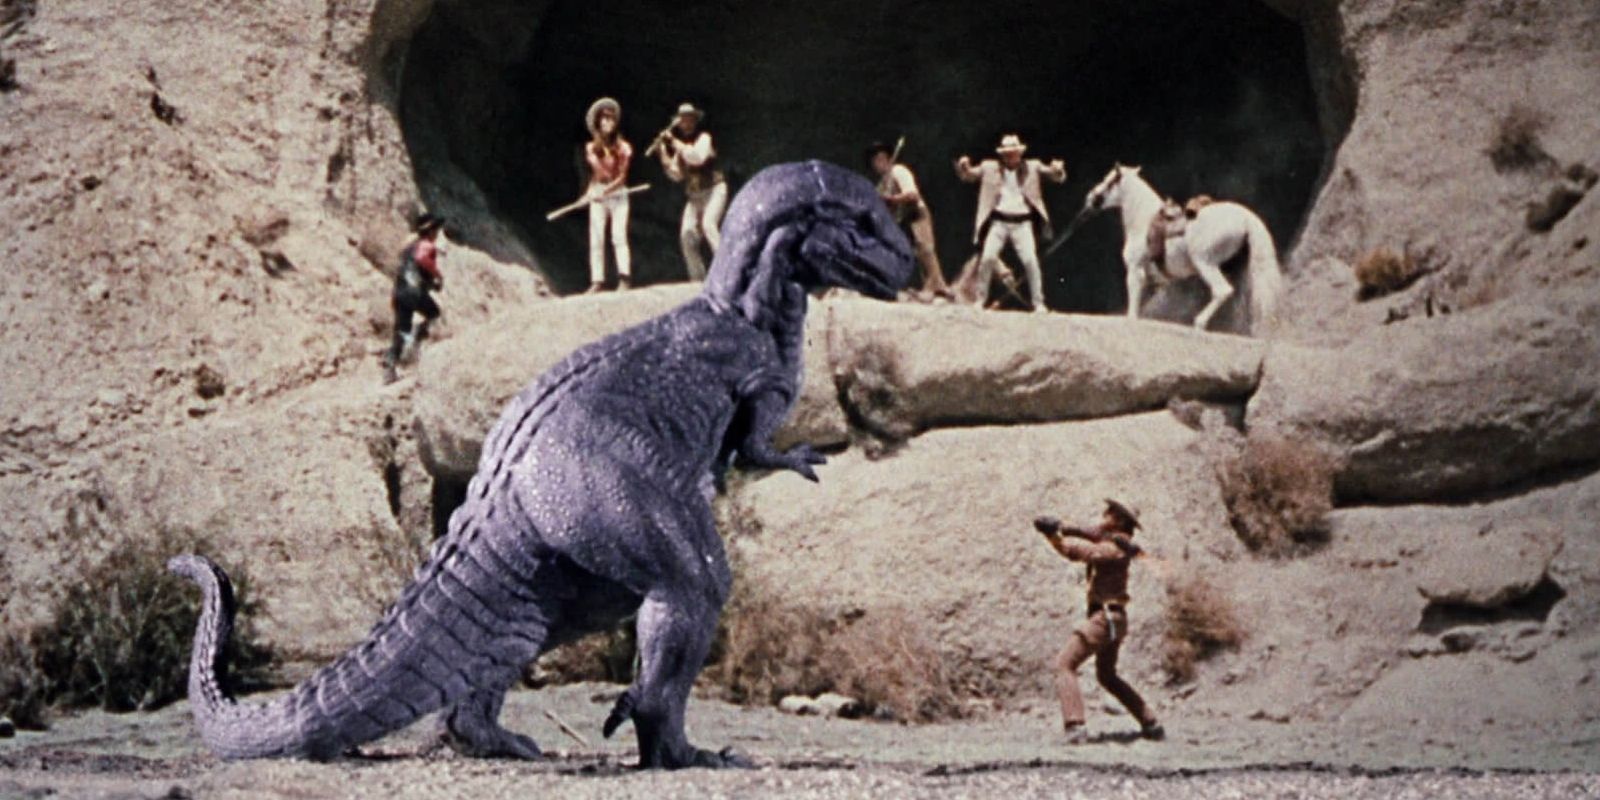 10 Best Dinosaur Movies Ranked By IMDb Score